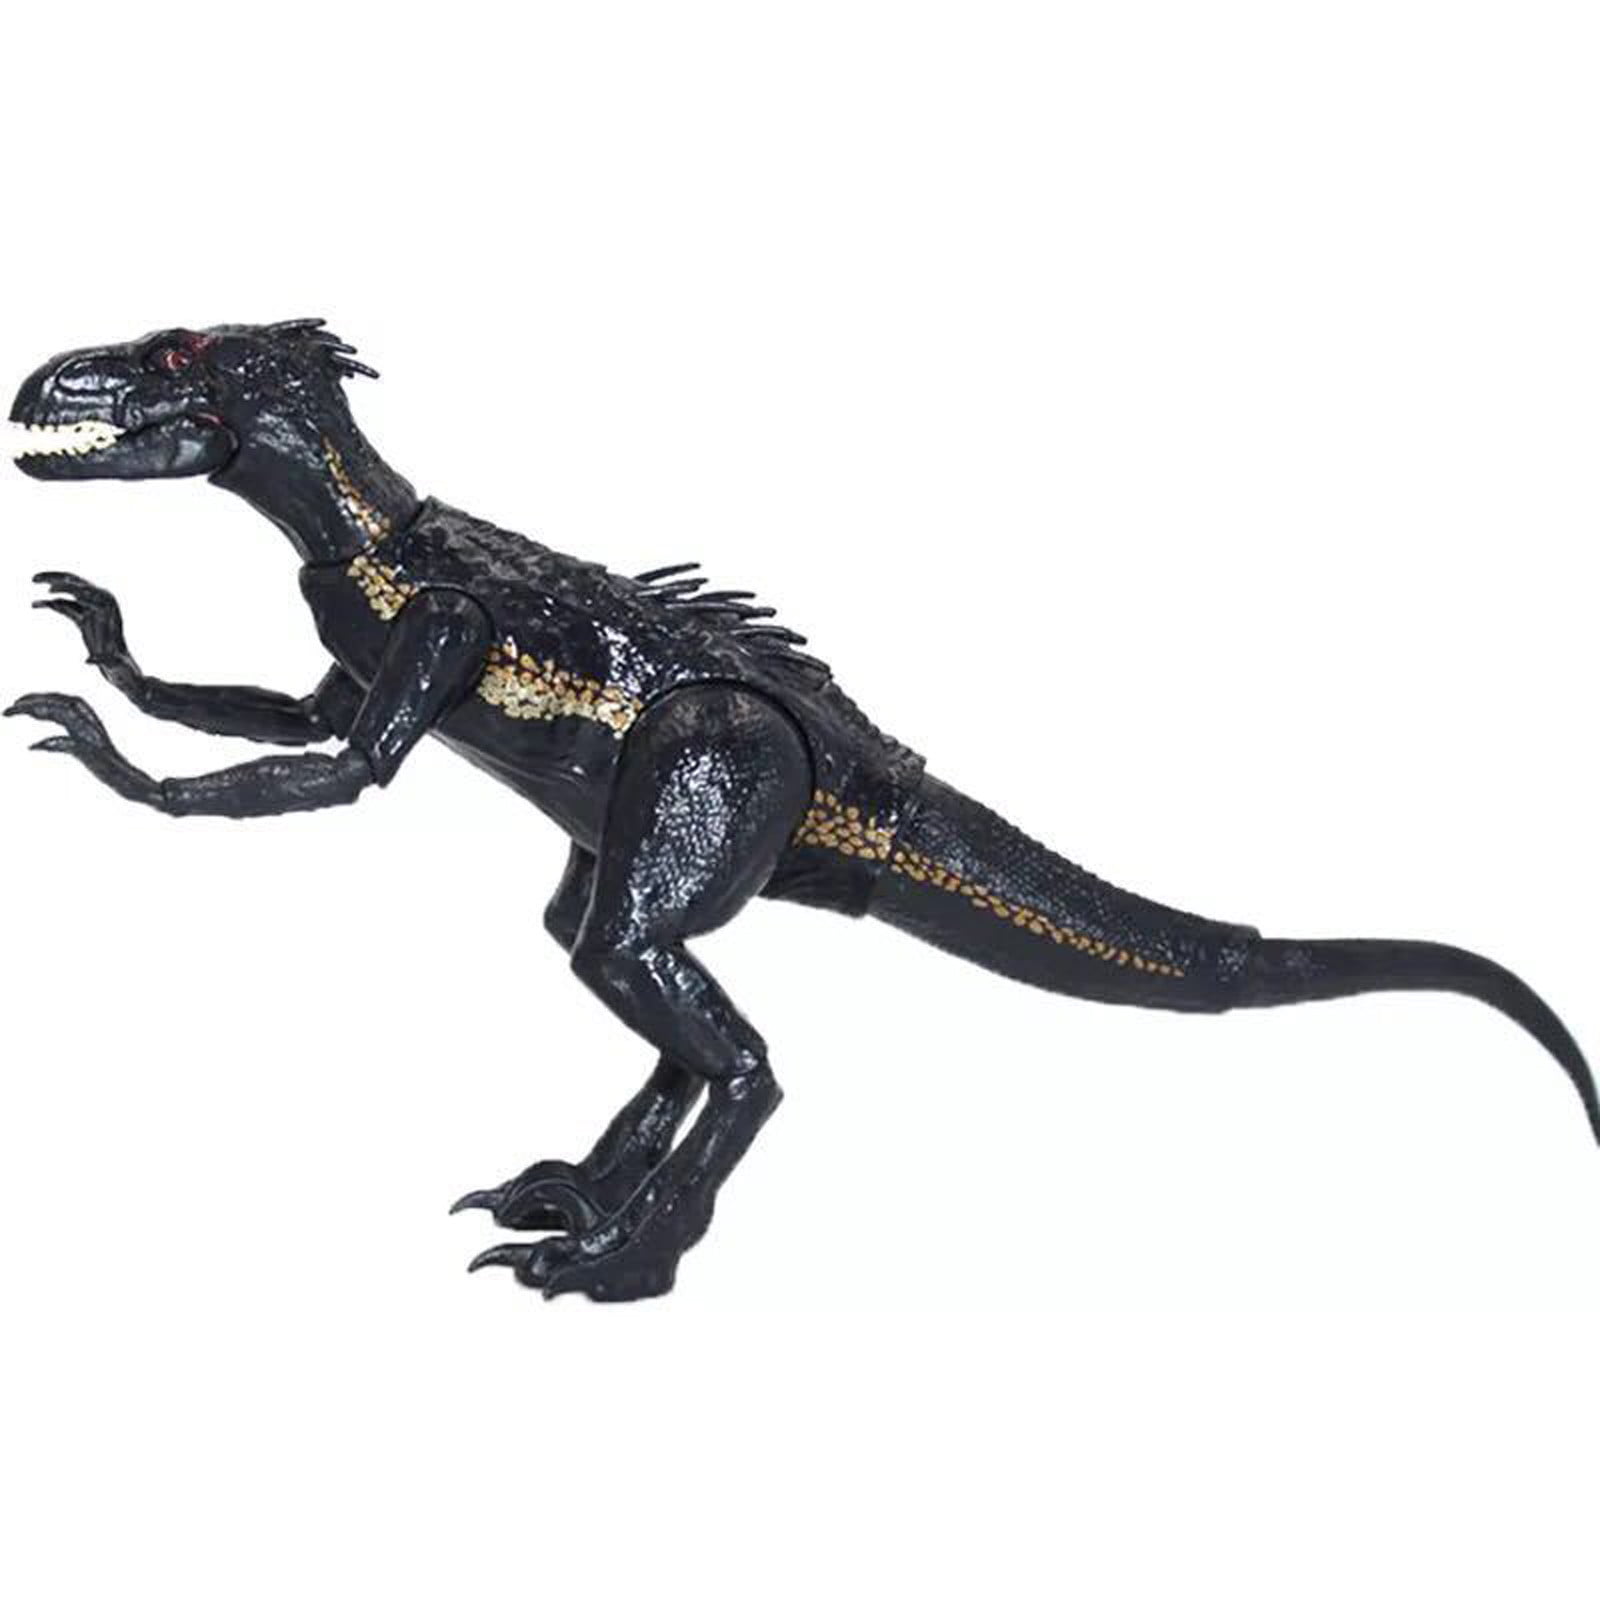 Indoraptor Statue Jurassic World Dinosaur Action Figure Movable Toy Kids Gift 6" 